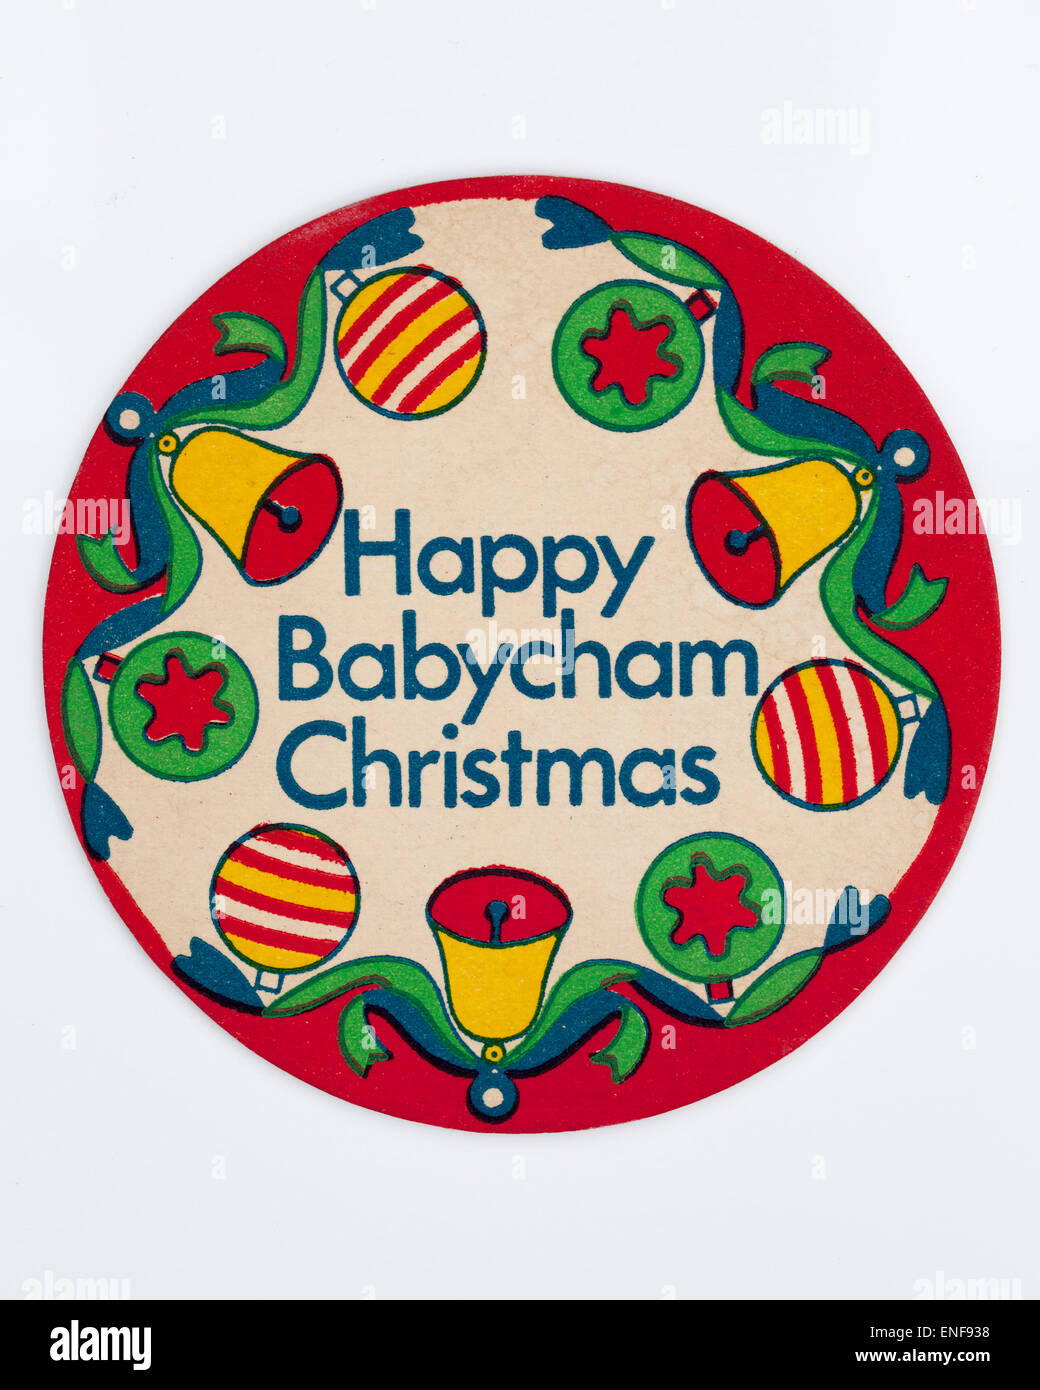 Vintage Beer Mat advertising Babycham at Christmas Stock Photo - Alamy